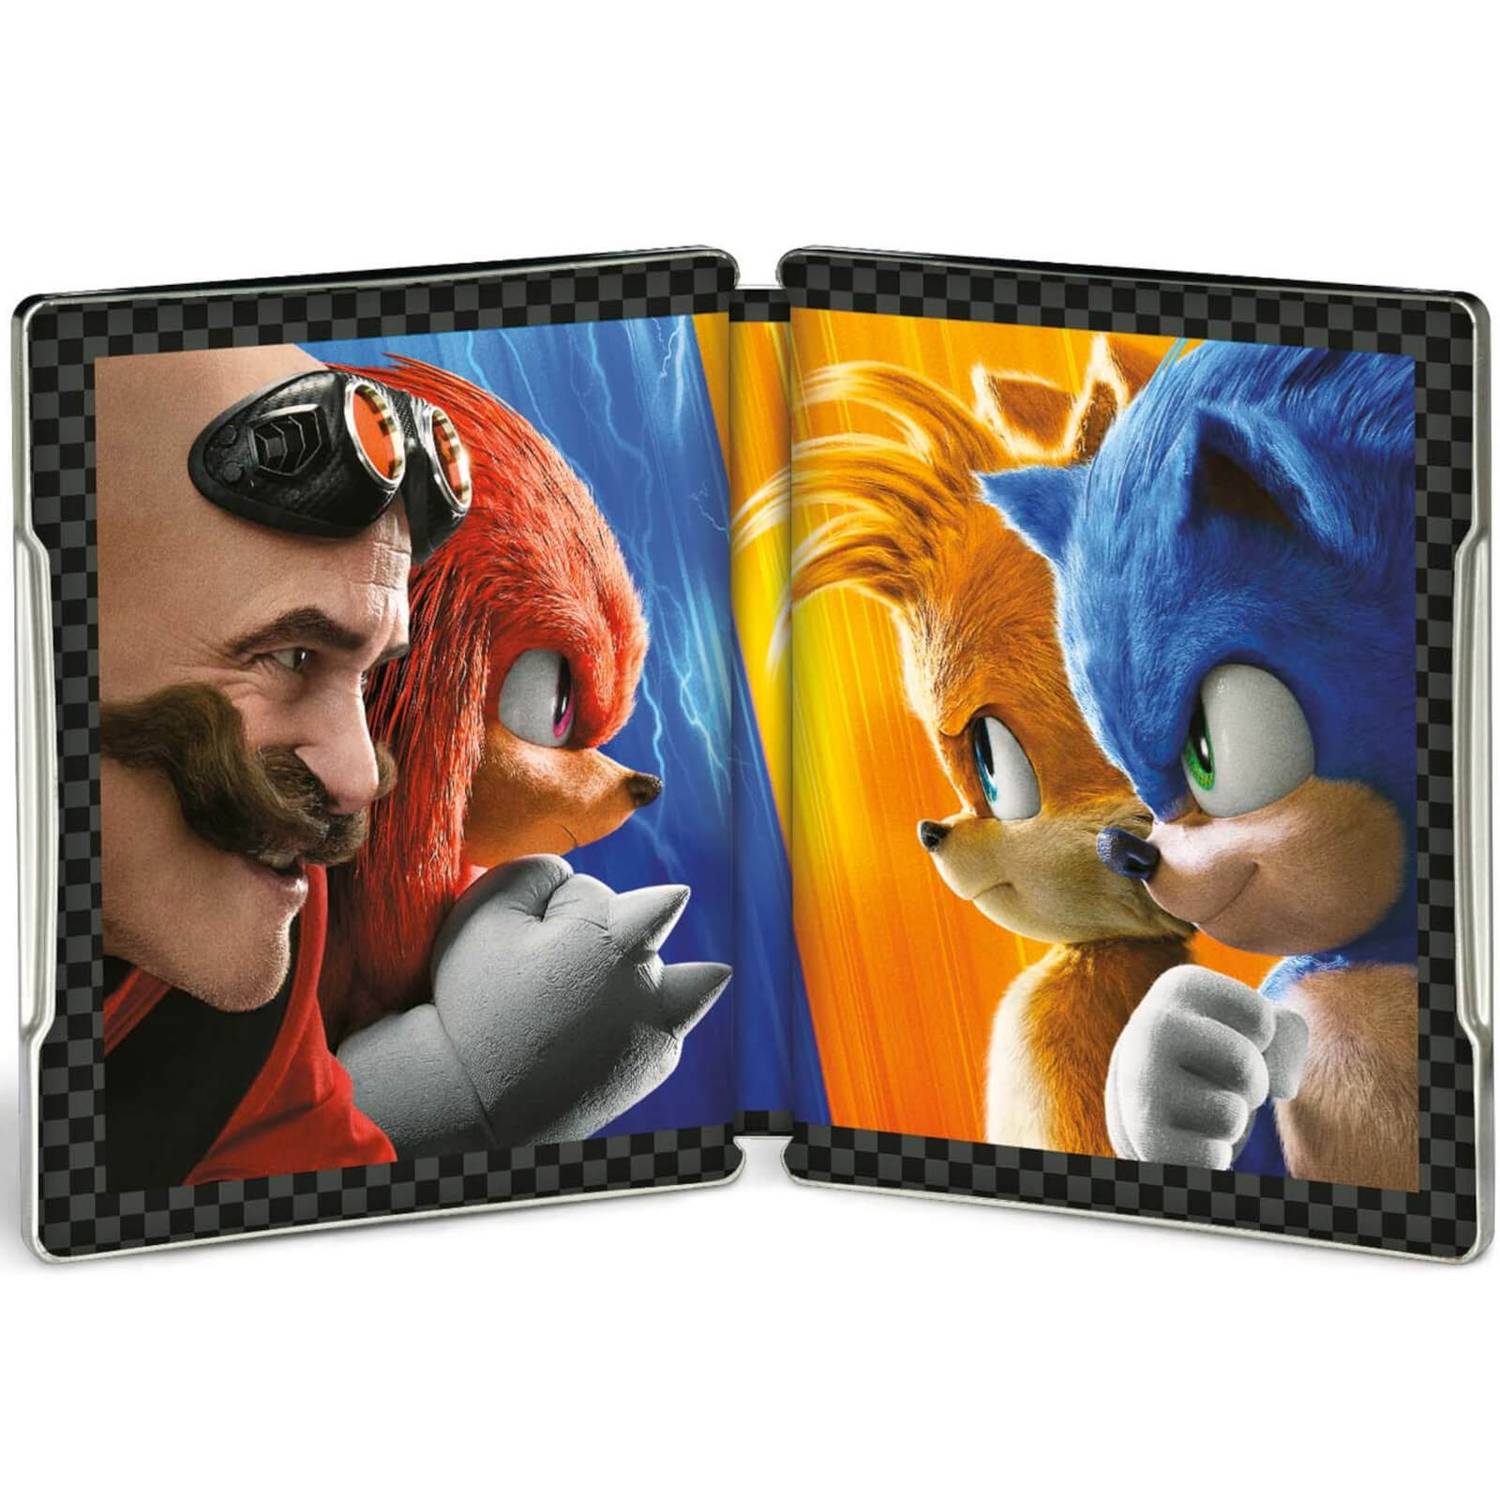 Sonic the Hedgehog 2 Steelbook (4K Ultra HD/BD) (2022)